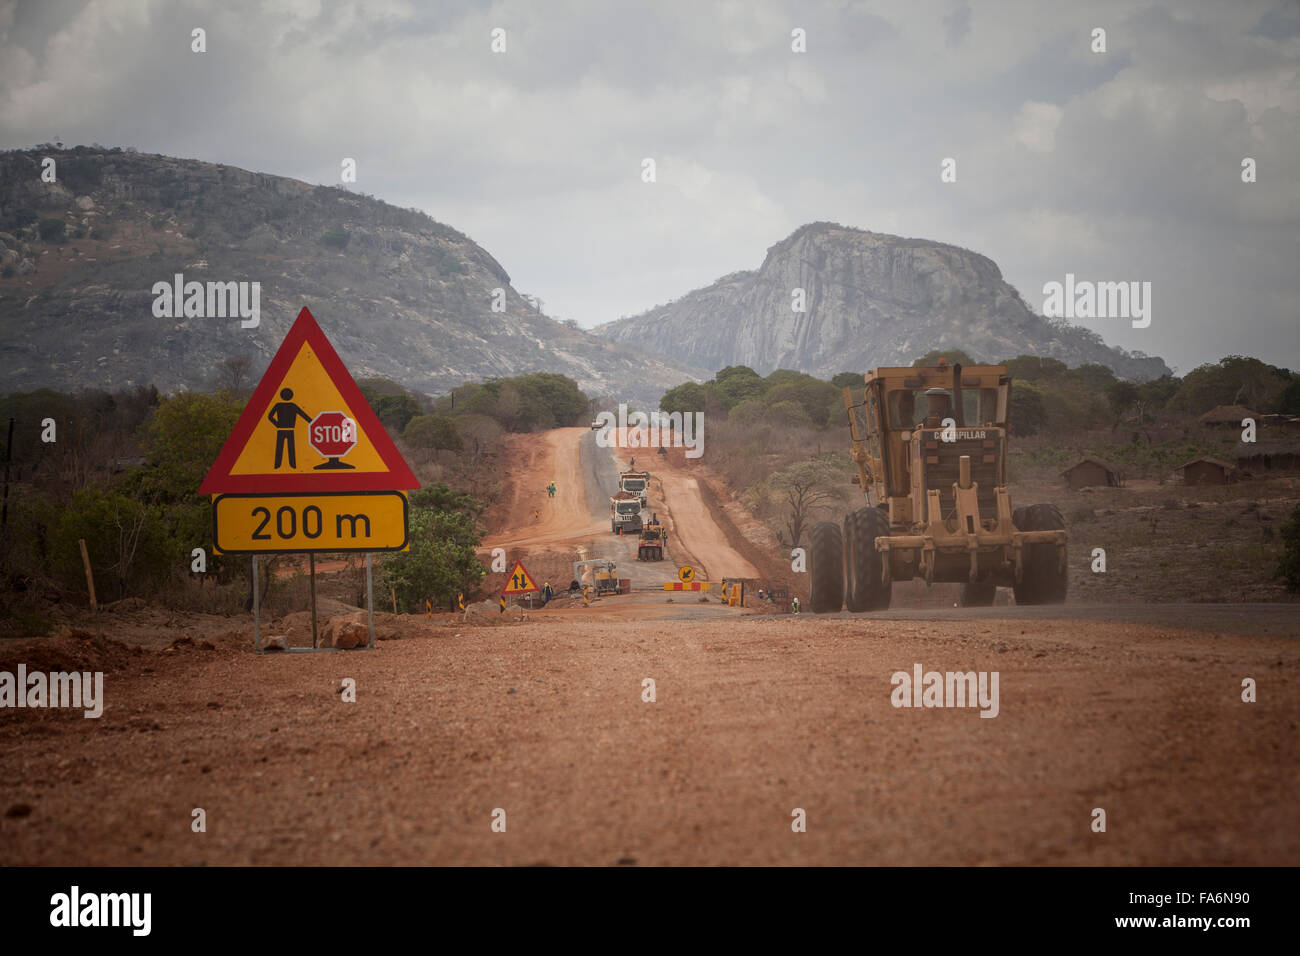 Namialo Rio Lurio Road im Norden Mosambiks erfährt Sanierung und Bau - SE Afrika. Stockfoto